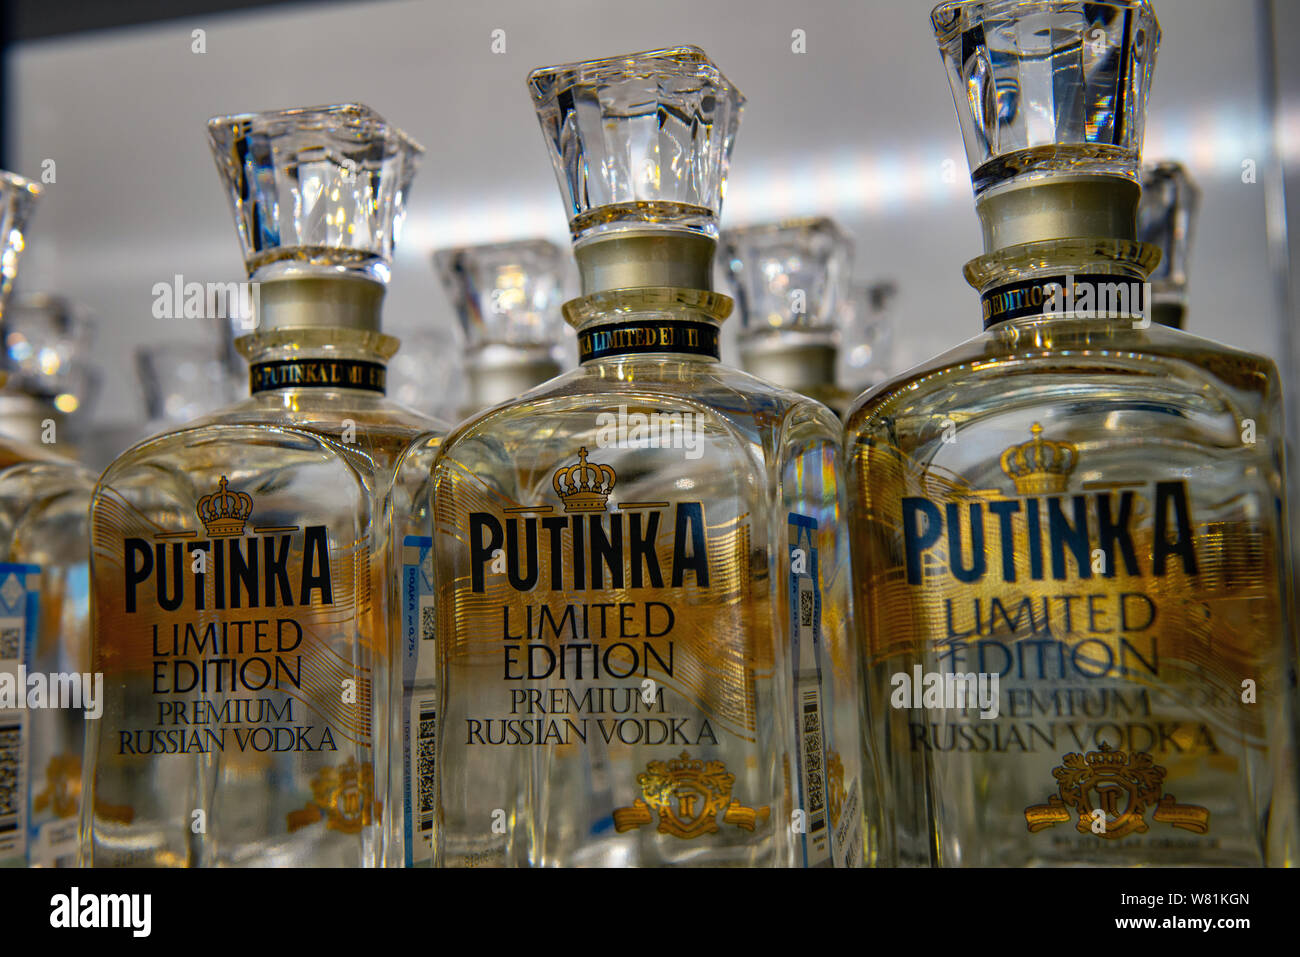 Putinka russian vodka named after vladimir putin Stock Photo - Alamy